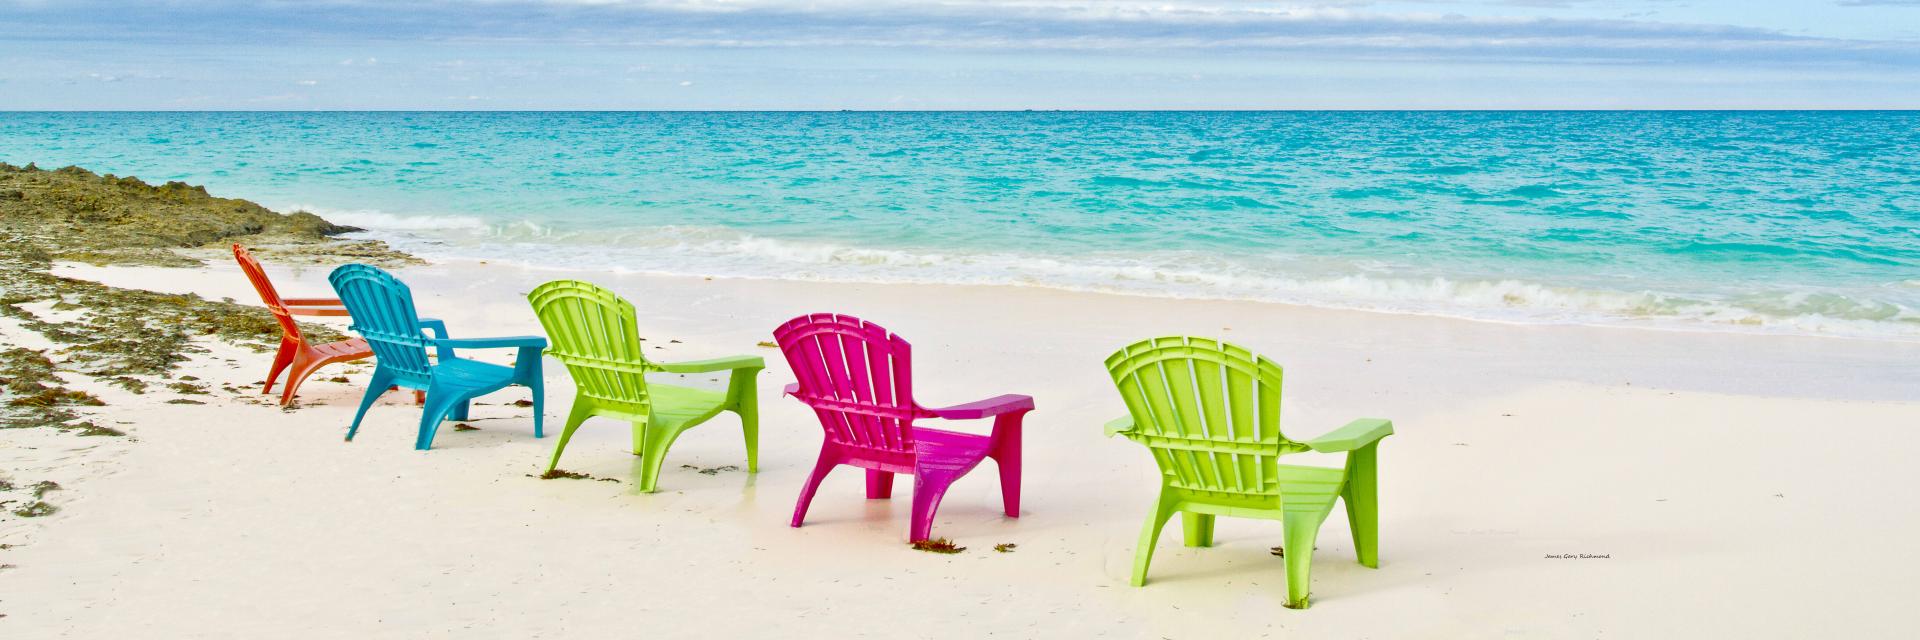 39993p  surf colorful chairs beach water tropical coastal bahamas  islands seascape,, .jpg